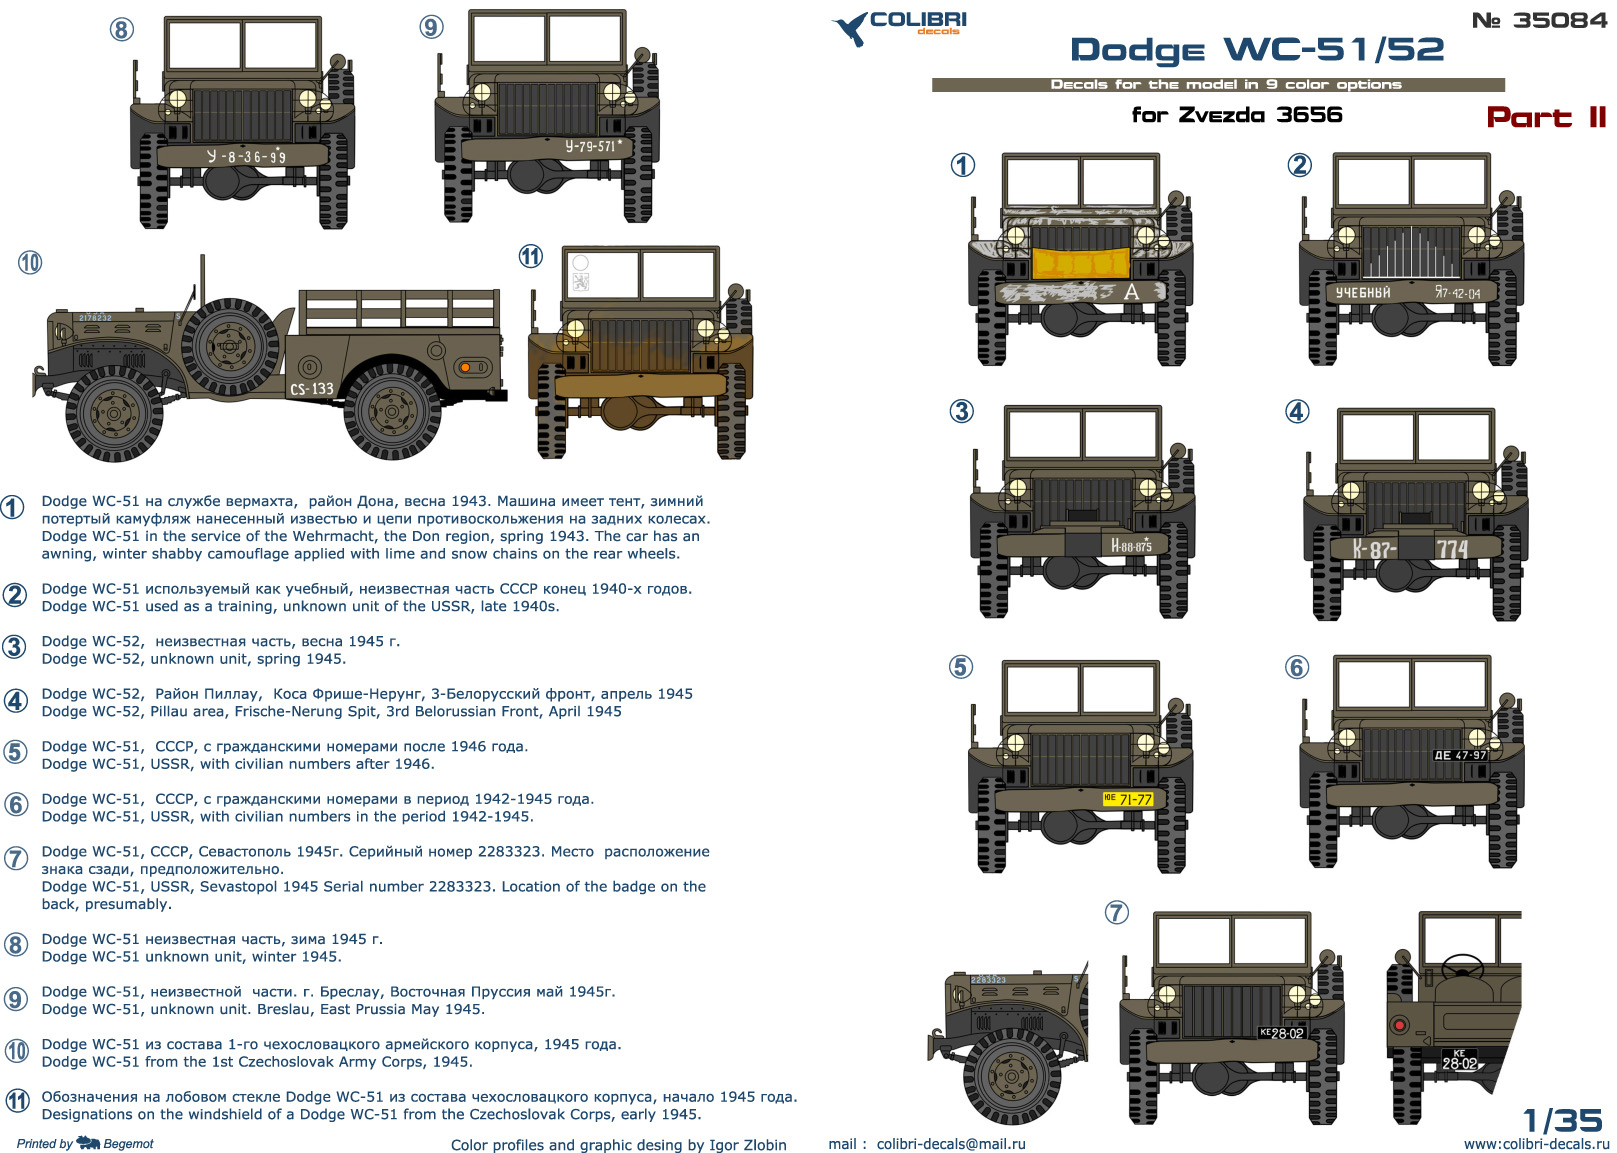 Decal 1/35 Dodge WC-51 part II (Colibri Decals)